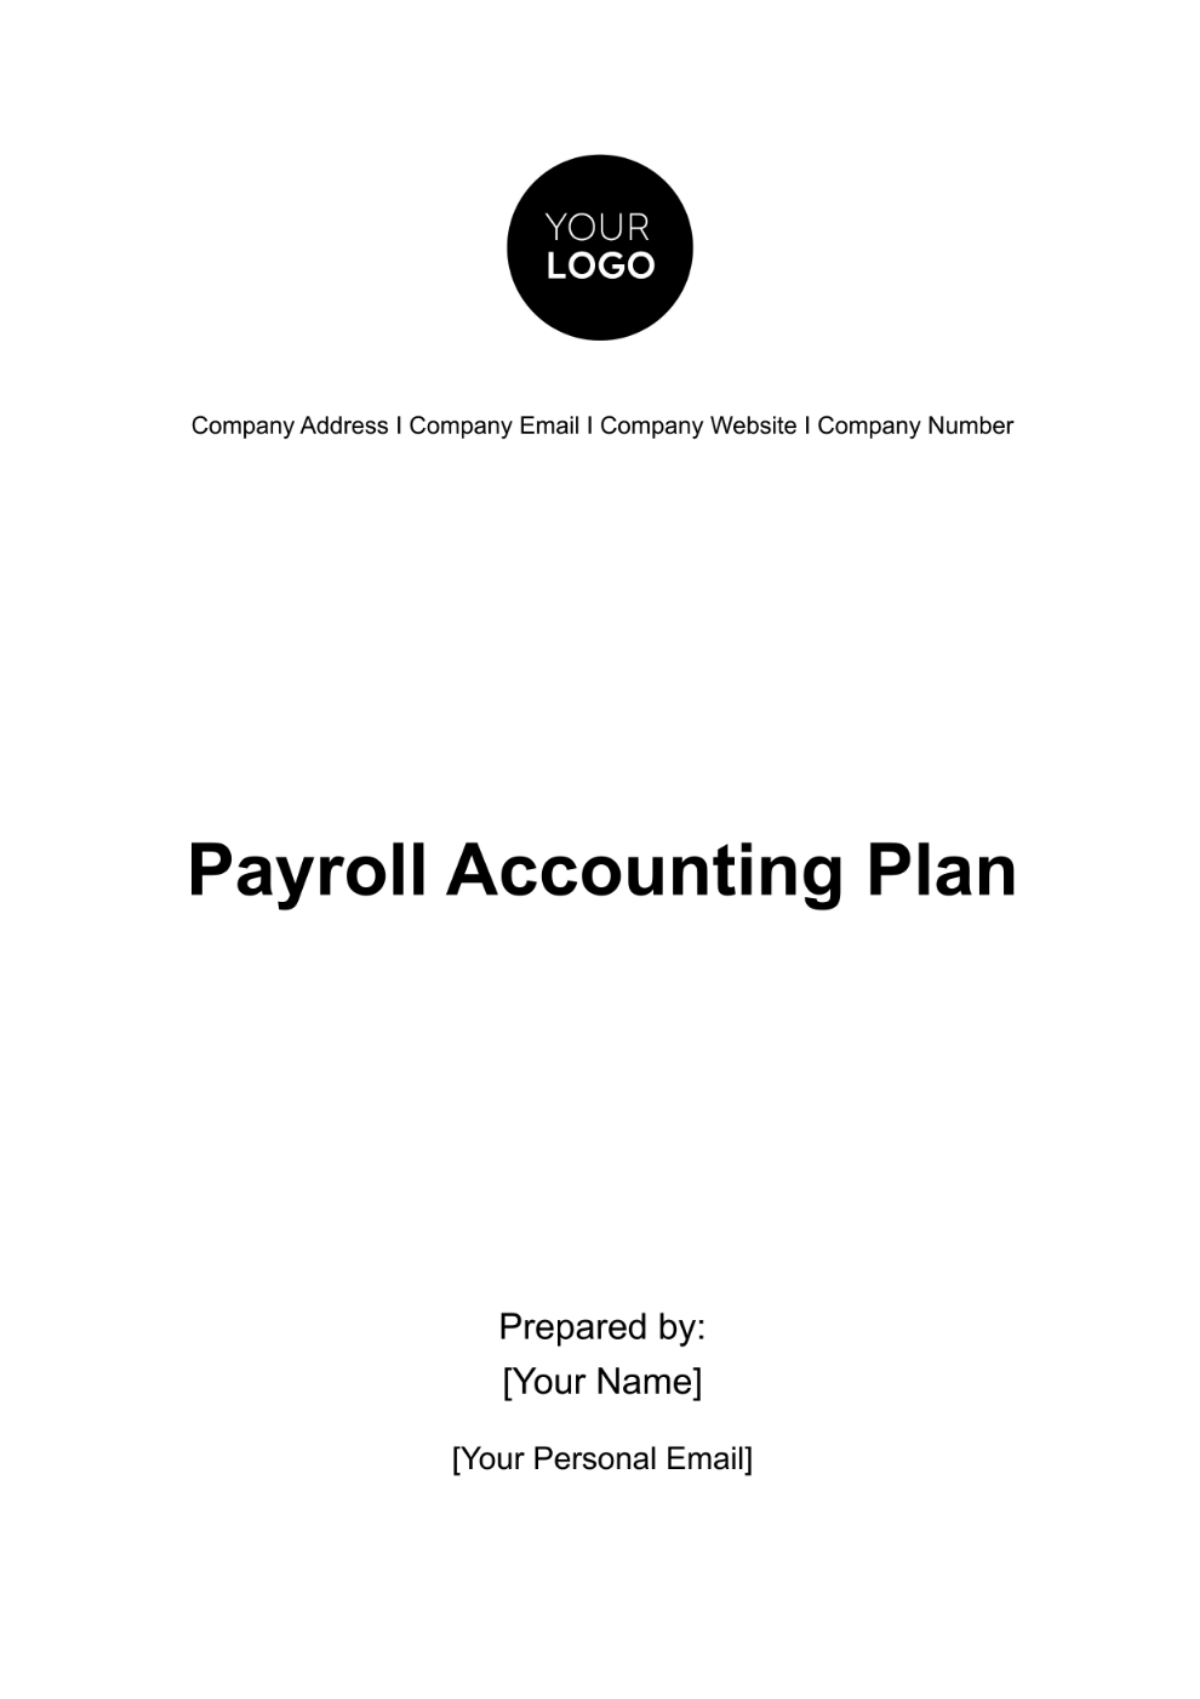 Payroll Accounting Plan Template